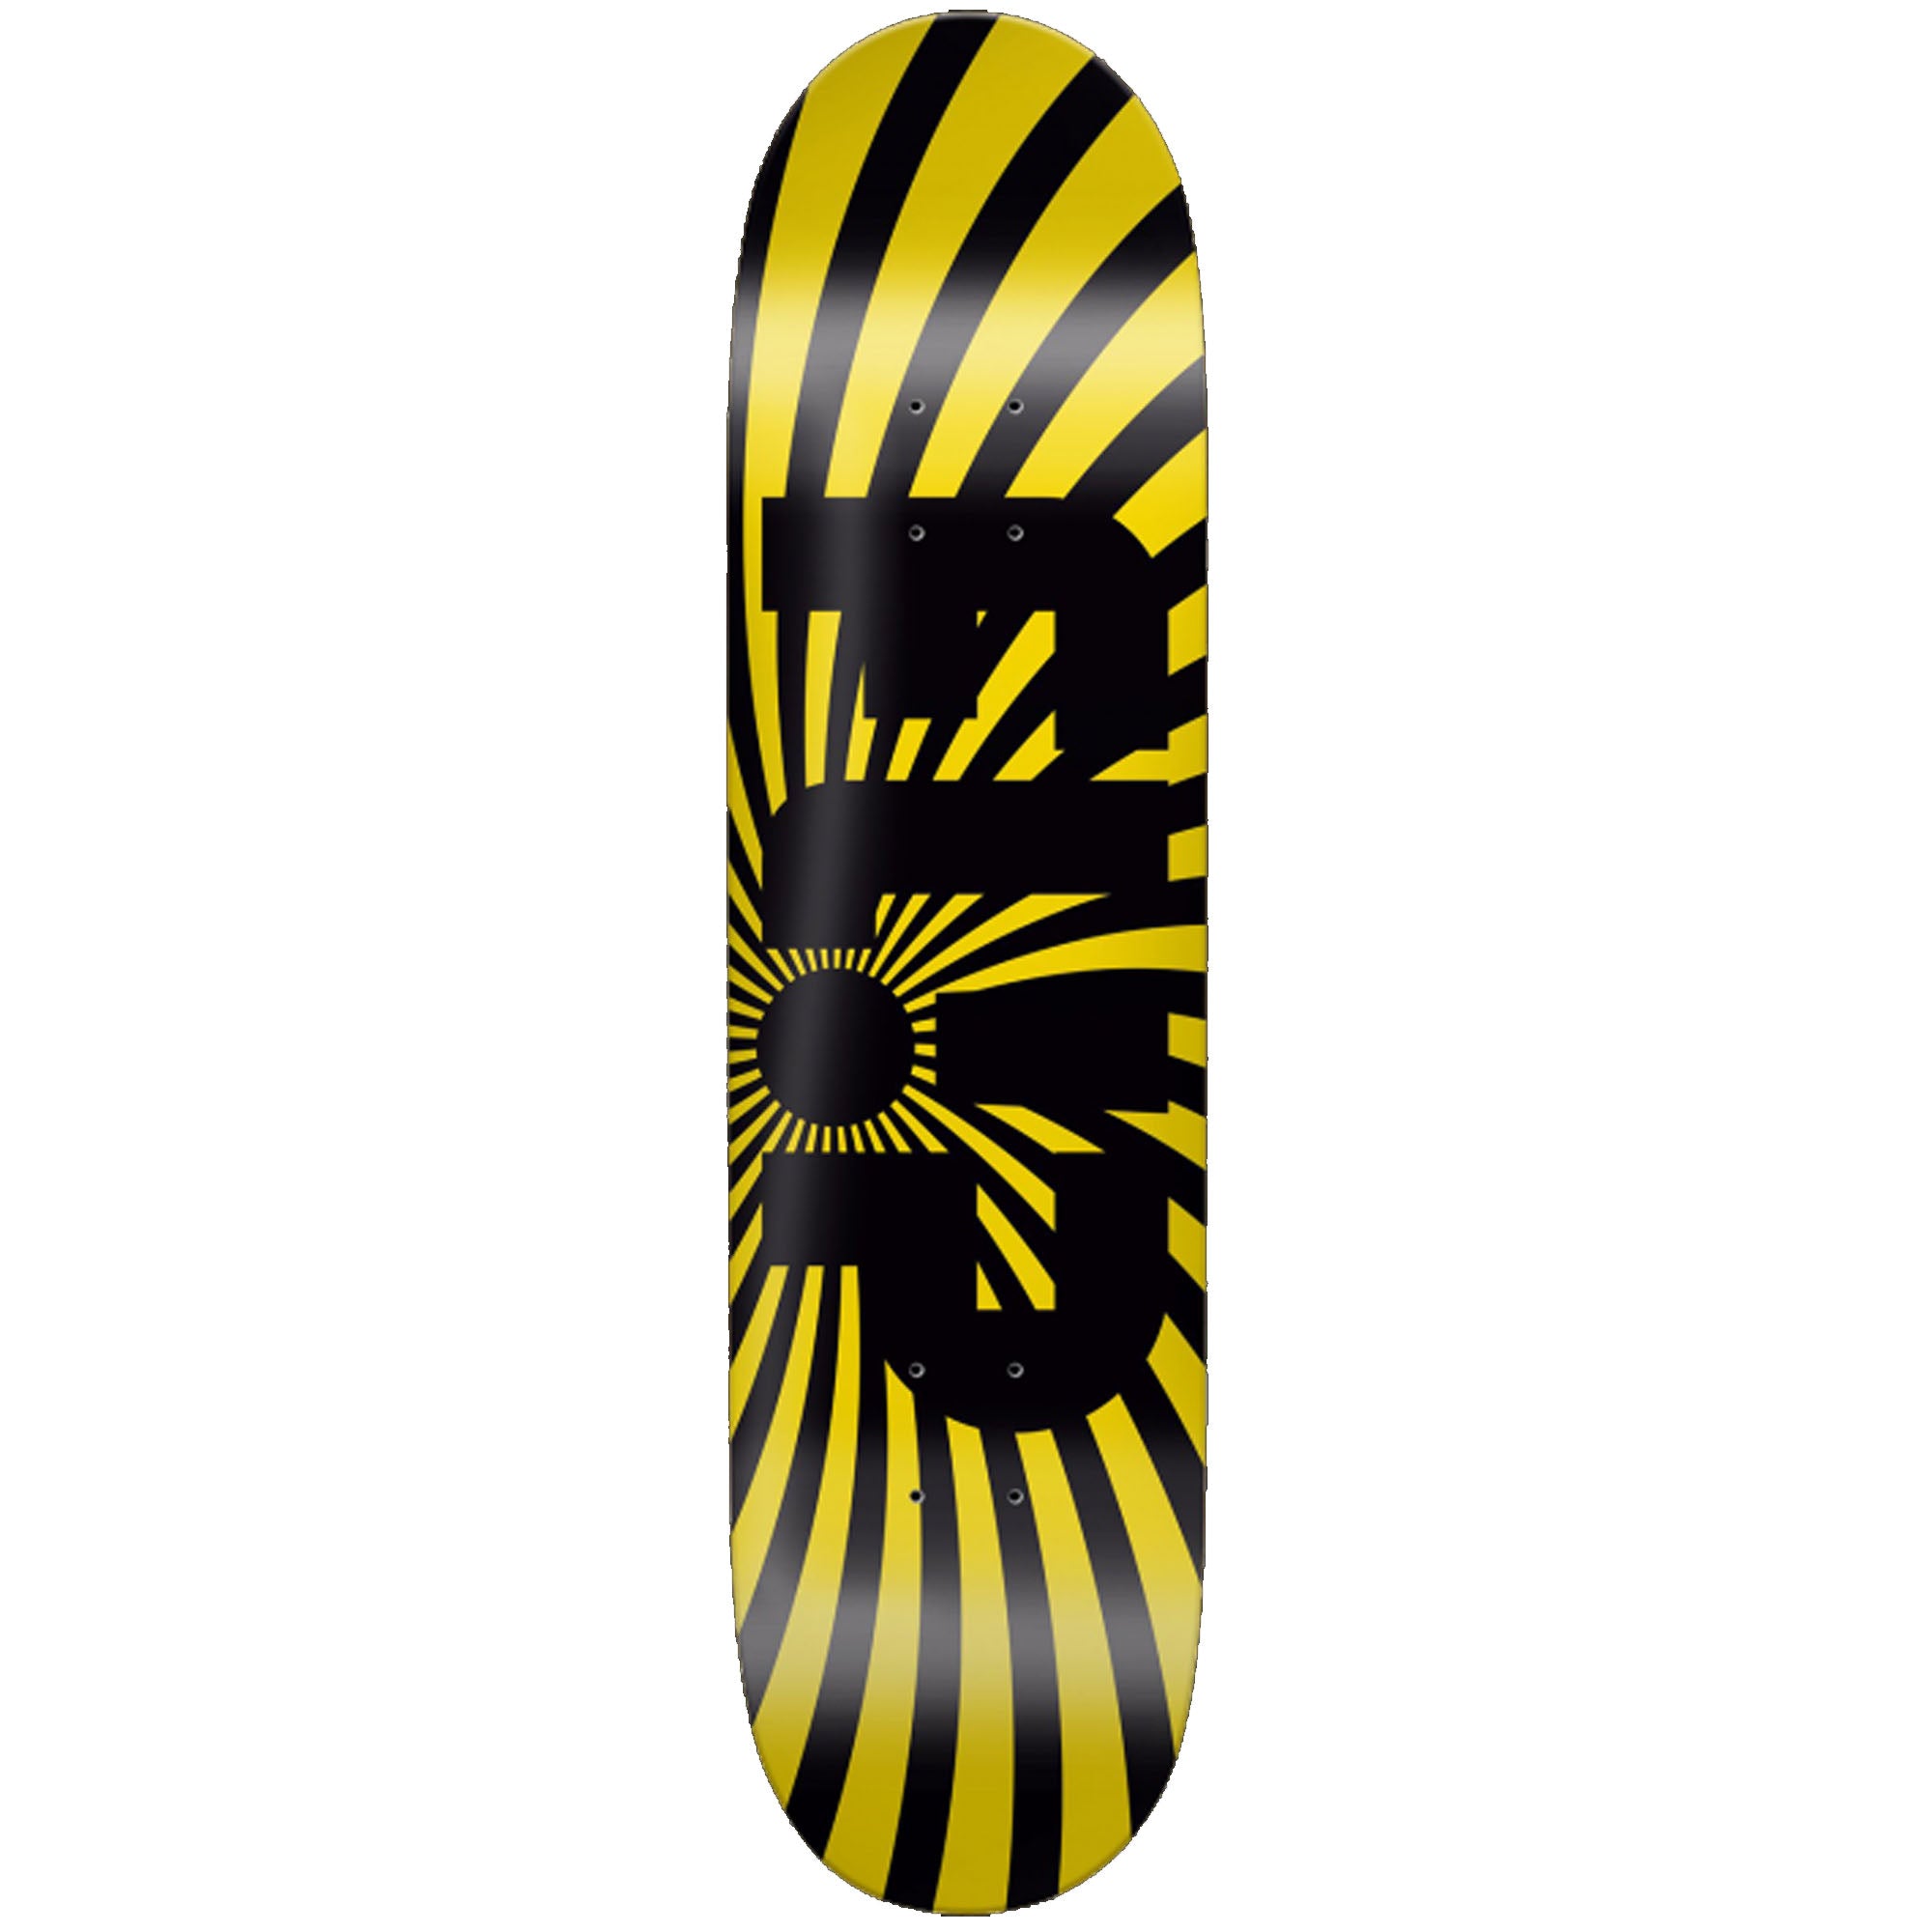 Flip Odyssey Spiral 8.25" Skateboard Deck